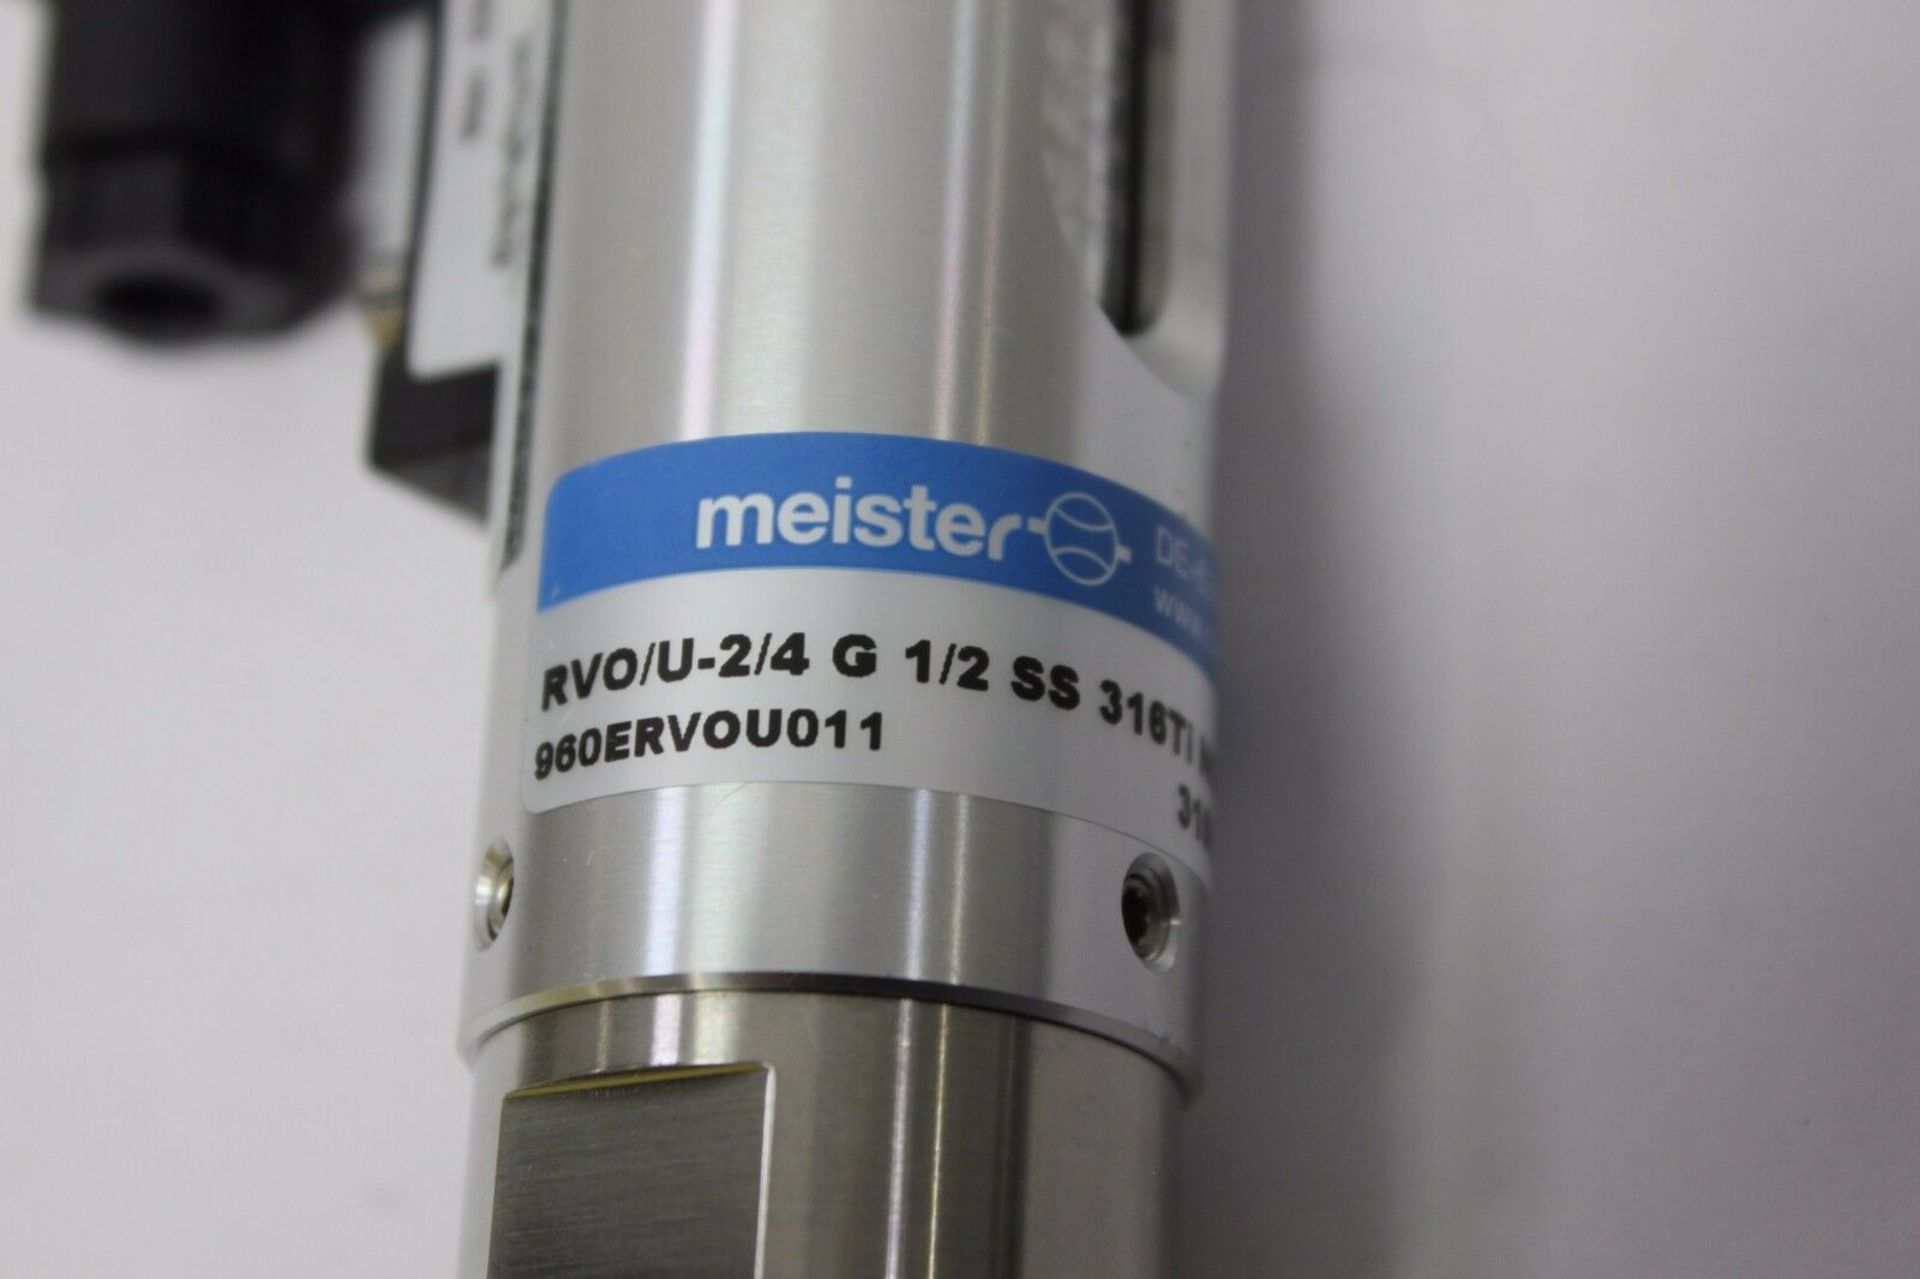 New Meister 316Ti Liquid Flow Monitor & Indicator - Image 4 of 5